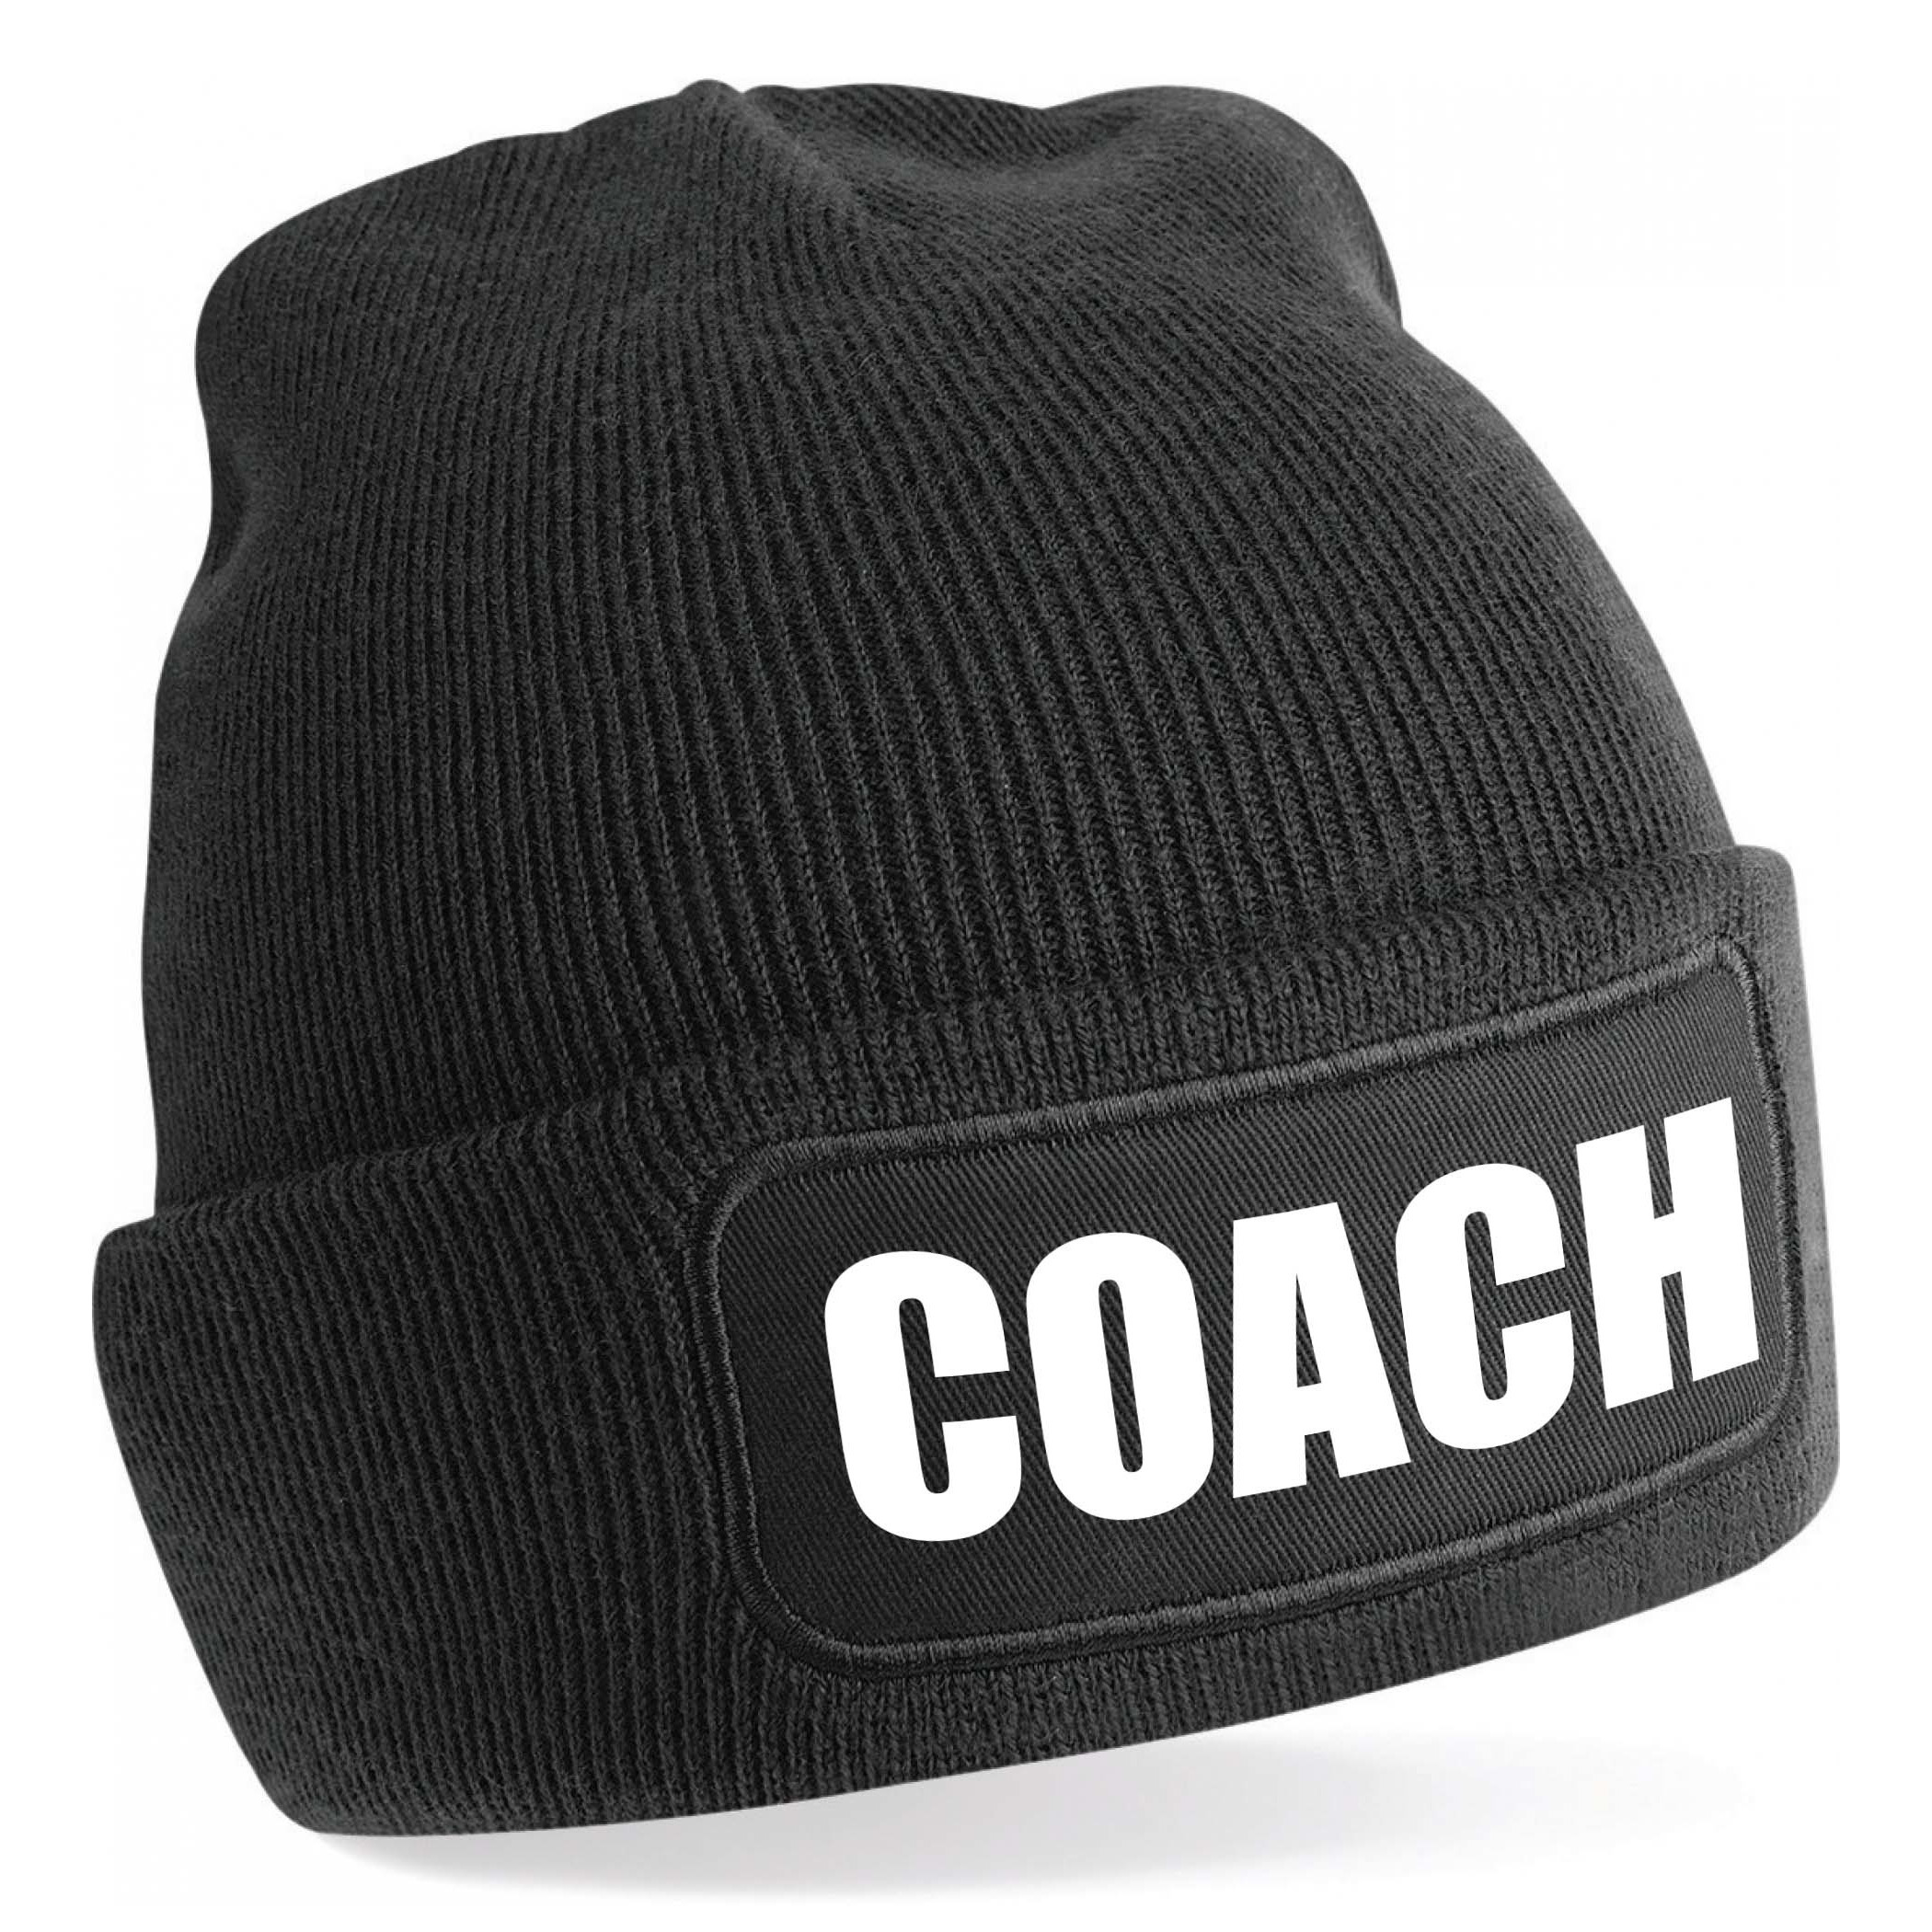 Muts coach zwart voor volwassenen Cadeau trainer- coach wintermuts